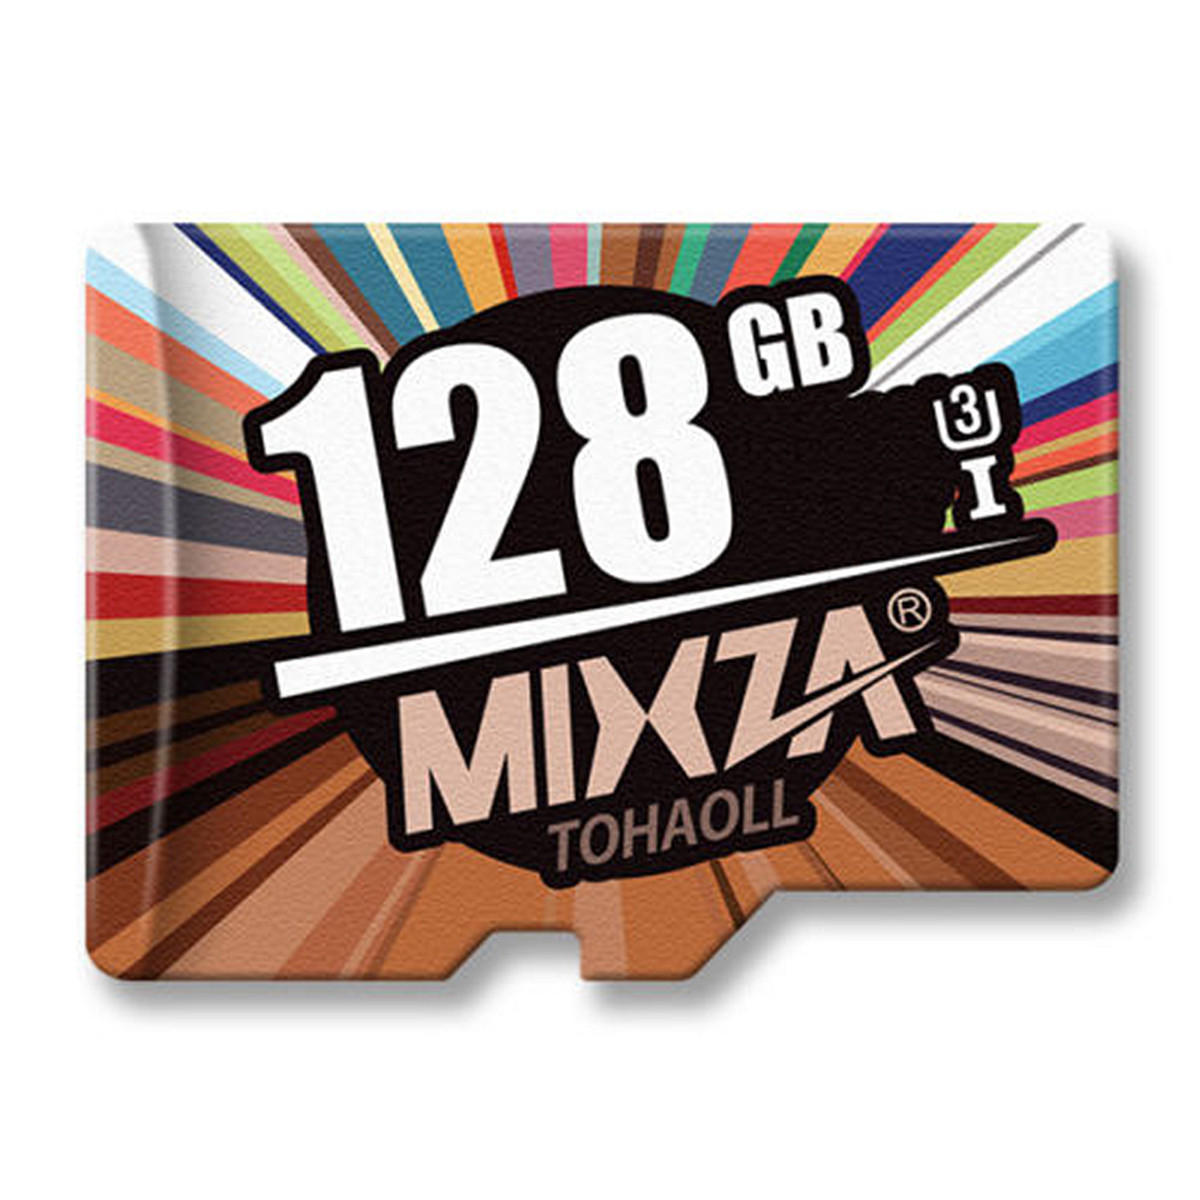 MIXZA Fashion Edition U3 Class 10 128GB TF Micro Memory Card for DSLR Digital Camera MP3 HIFI Player